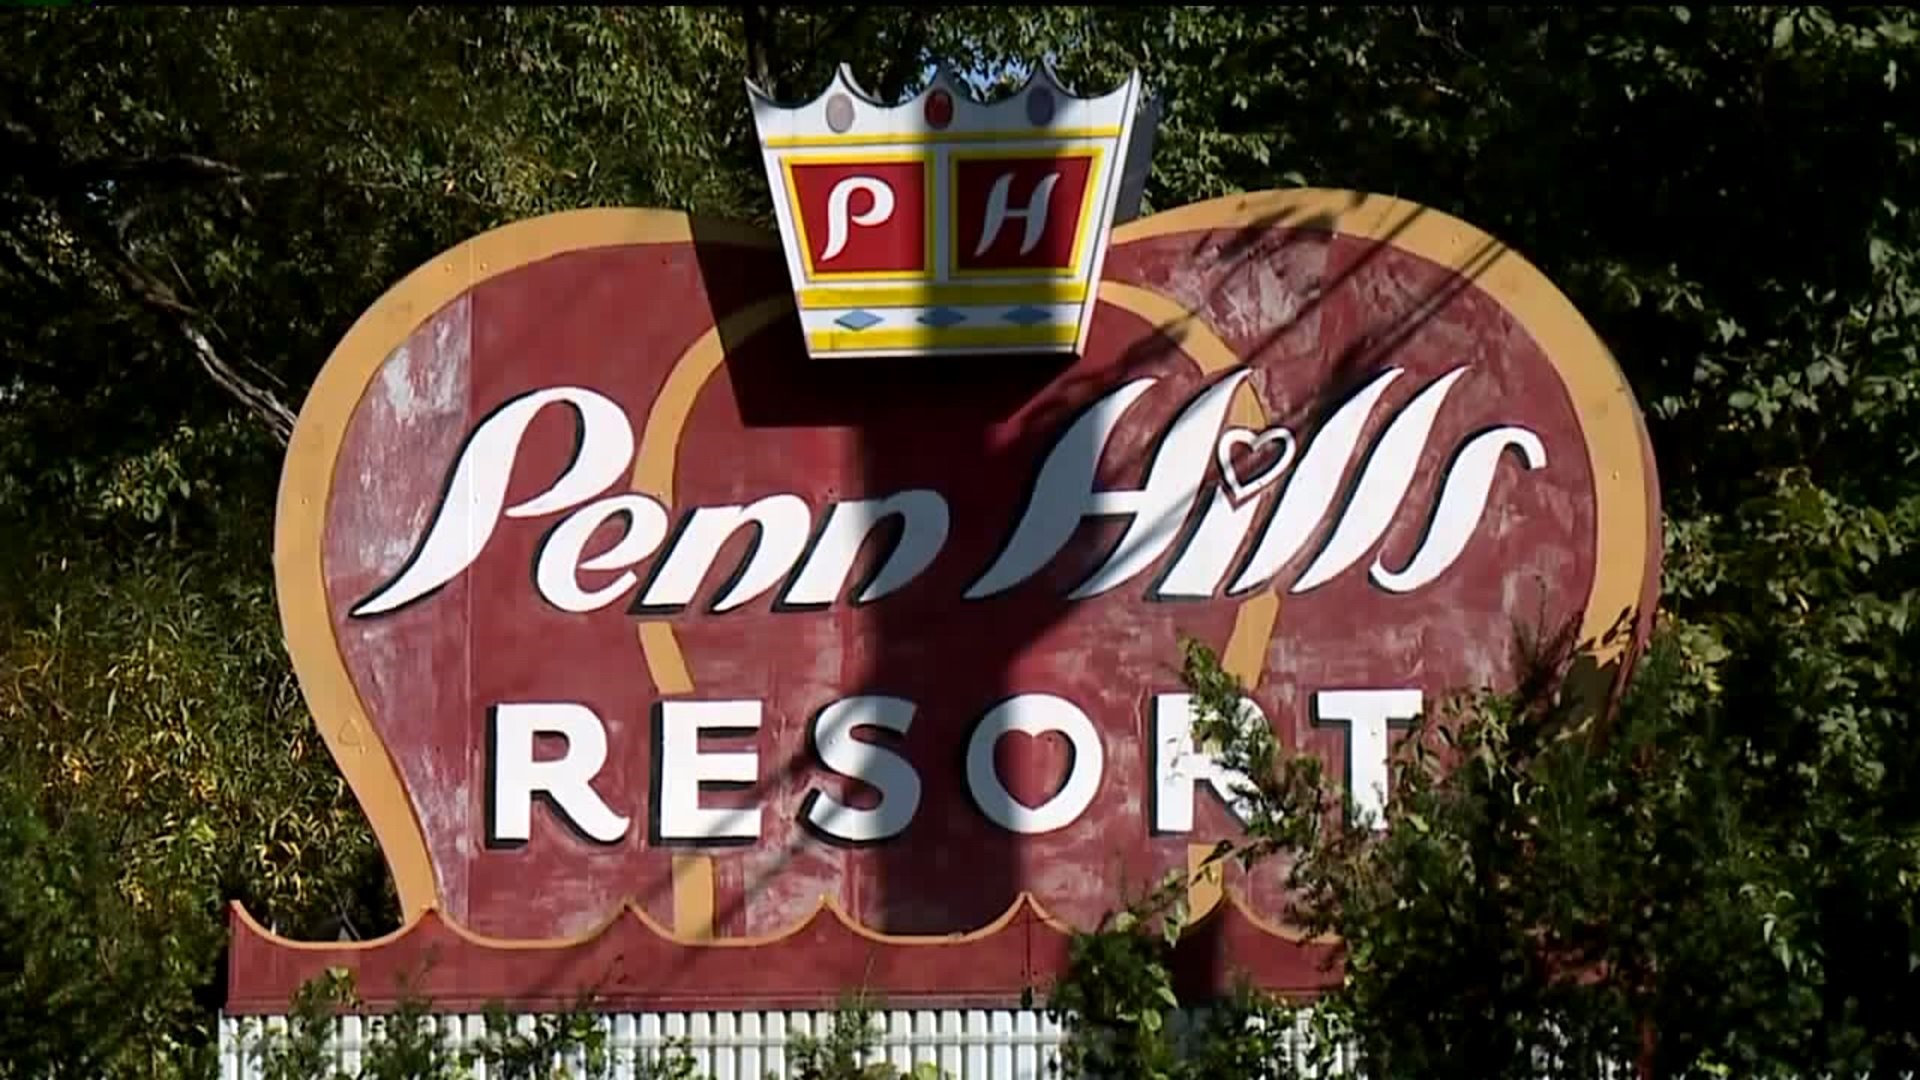 Fire at Former Penn Hills Resort Under Investigation